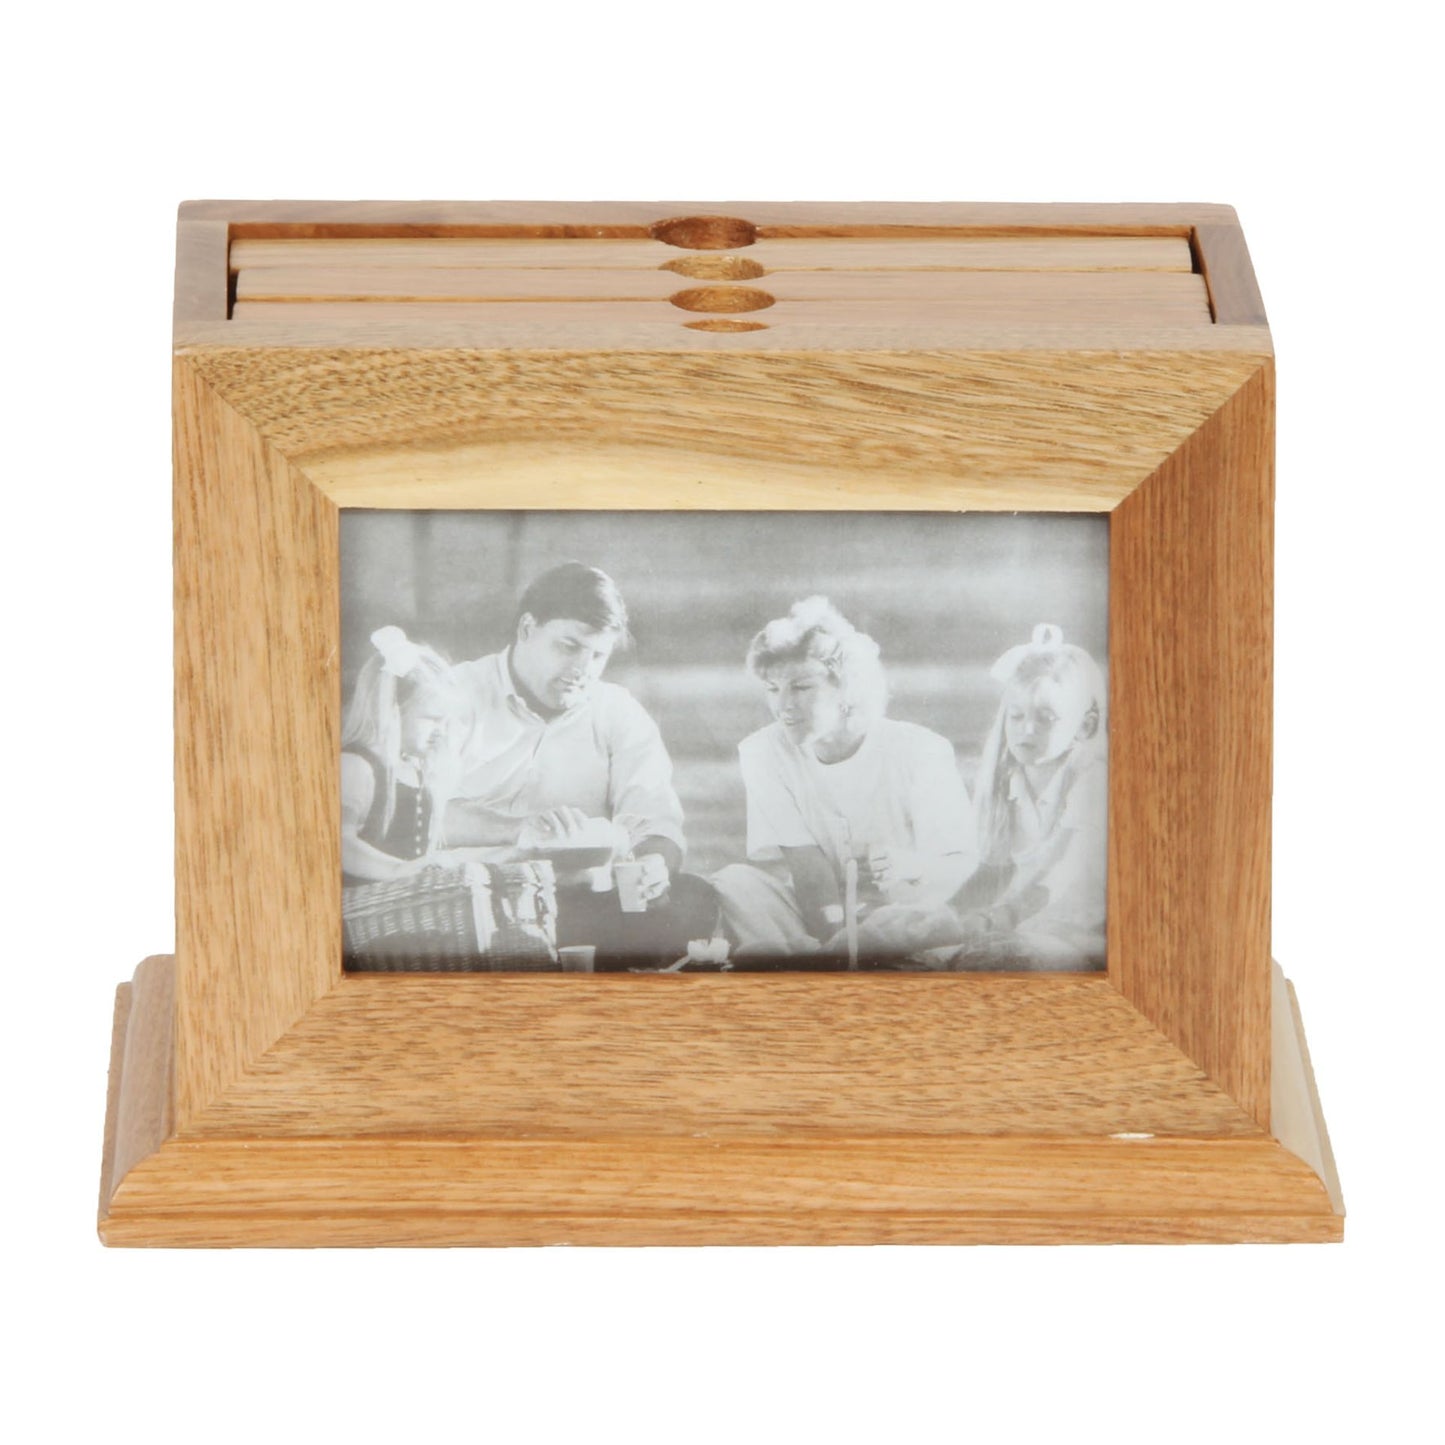 Wooden Photo Storage Box - 72 Photo Album and 6x4 Photo Frame